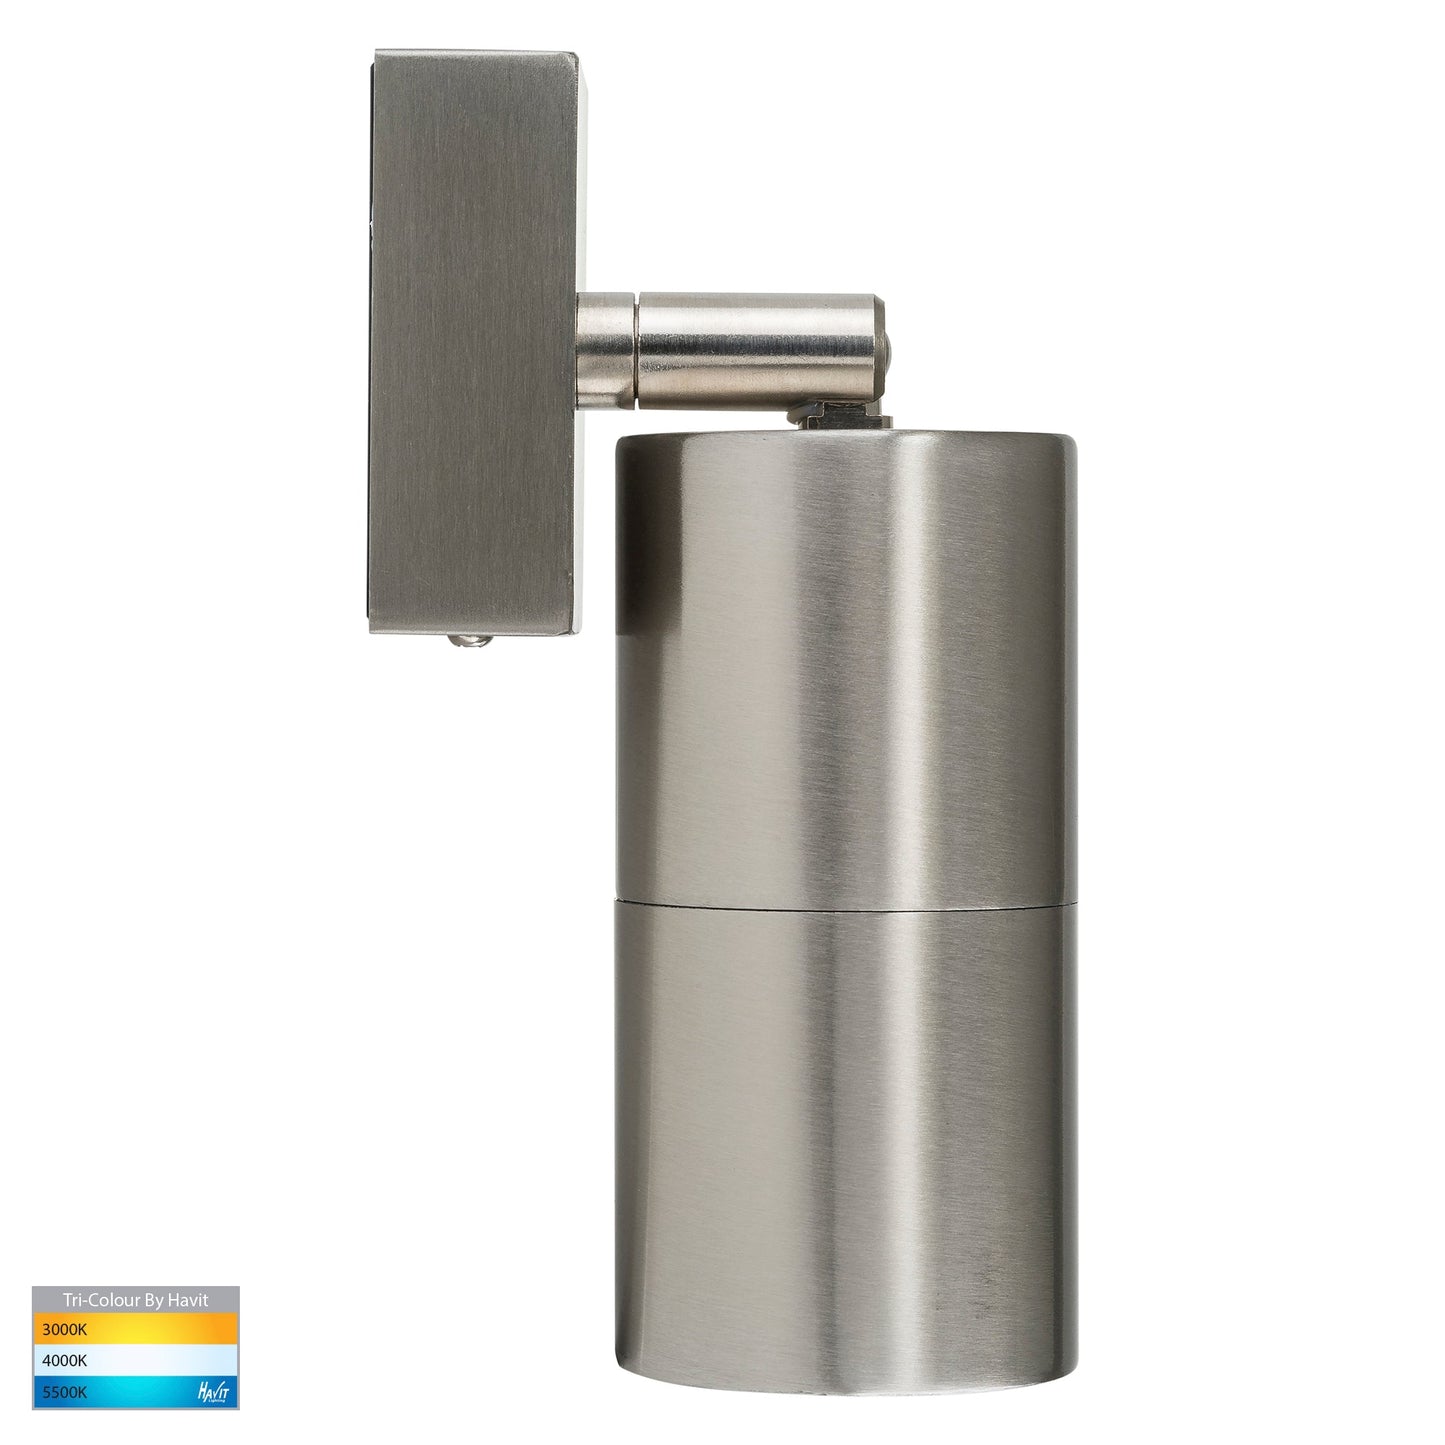 Single Adjustable Wall Pillar Light Stainless Steel  HV1271t